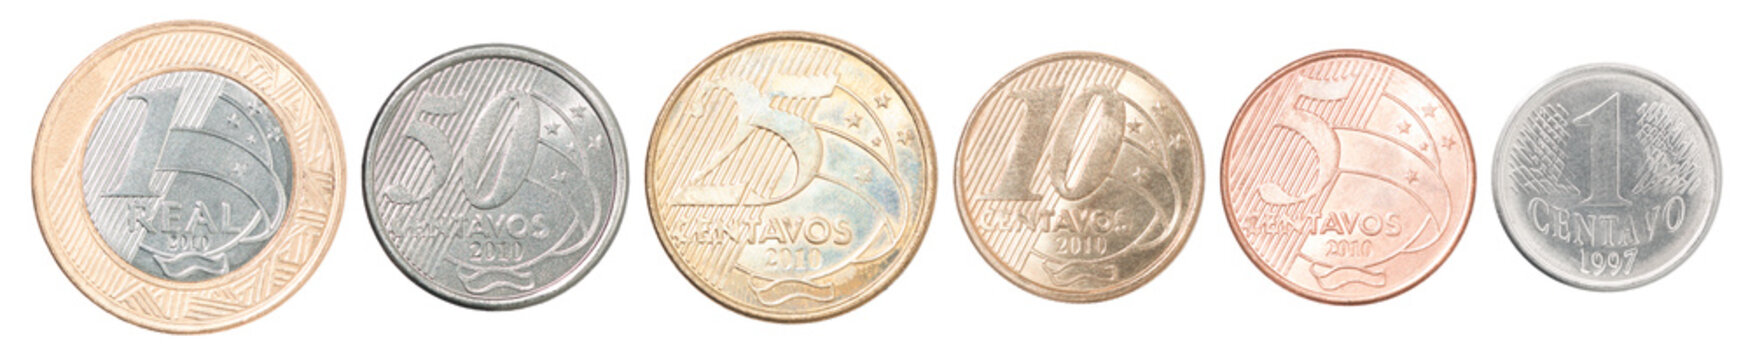 set of Brazilian coins